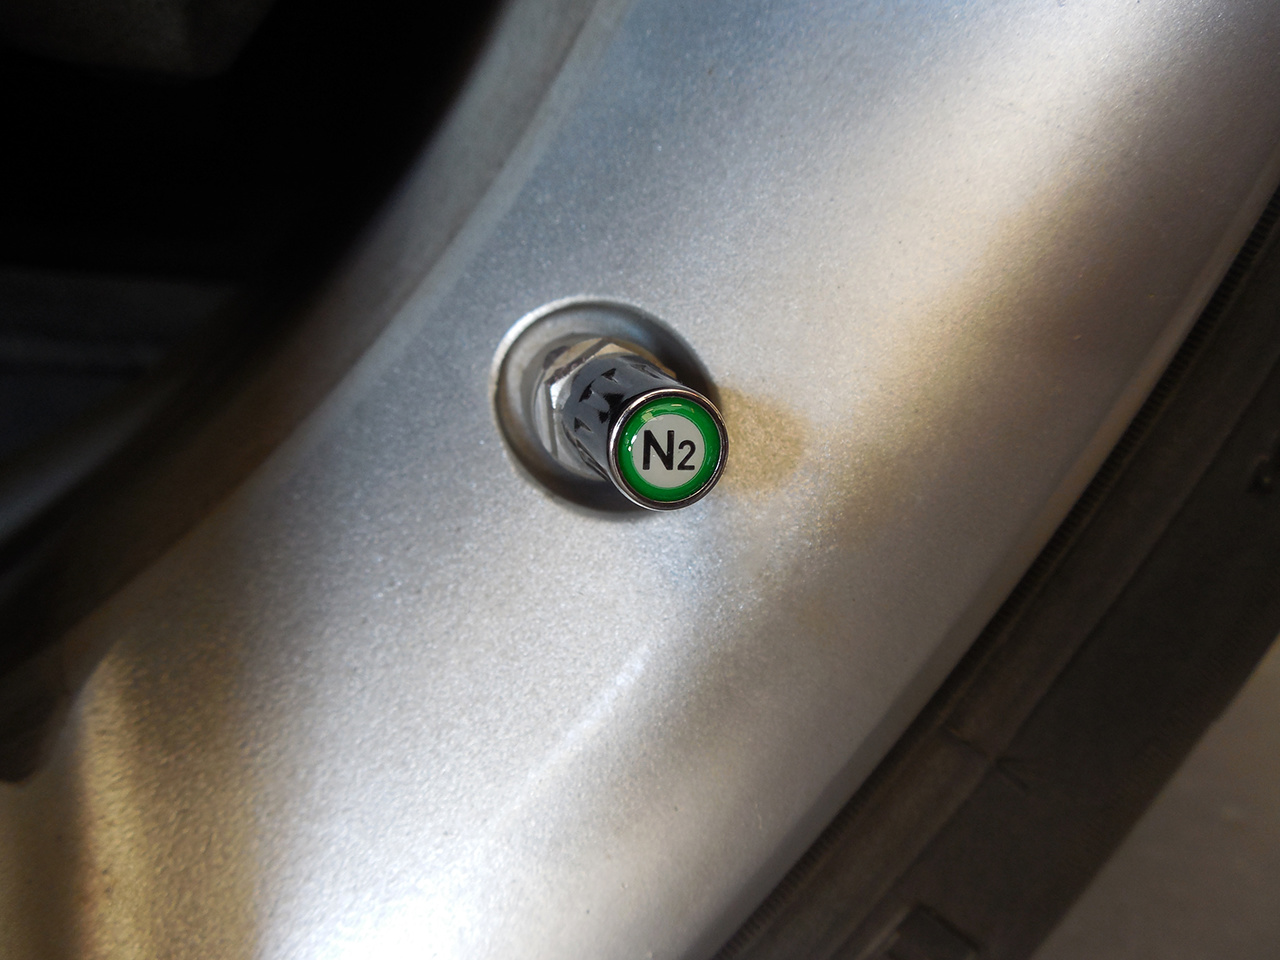 Chrome nitrogen (N2) TPMS-safe valve cap installed on an aluminum TPMS stem in an alloy wheel